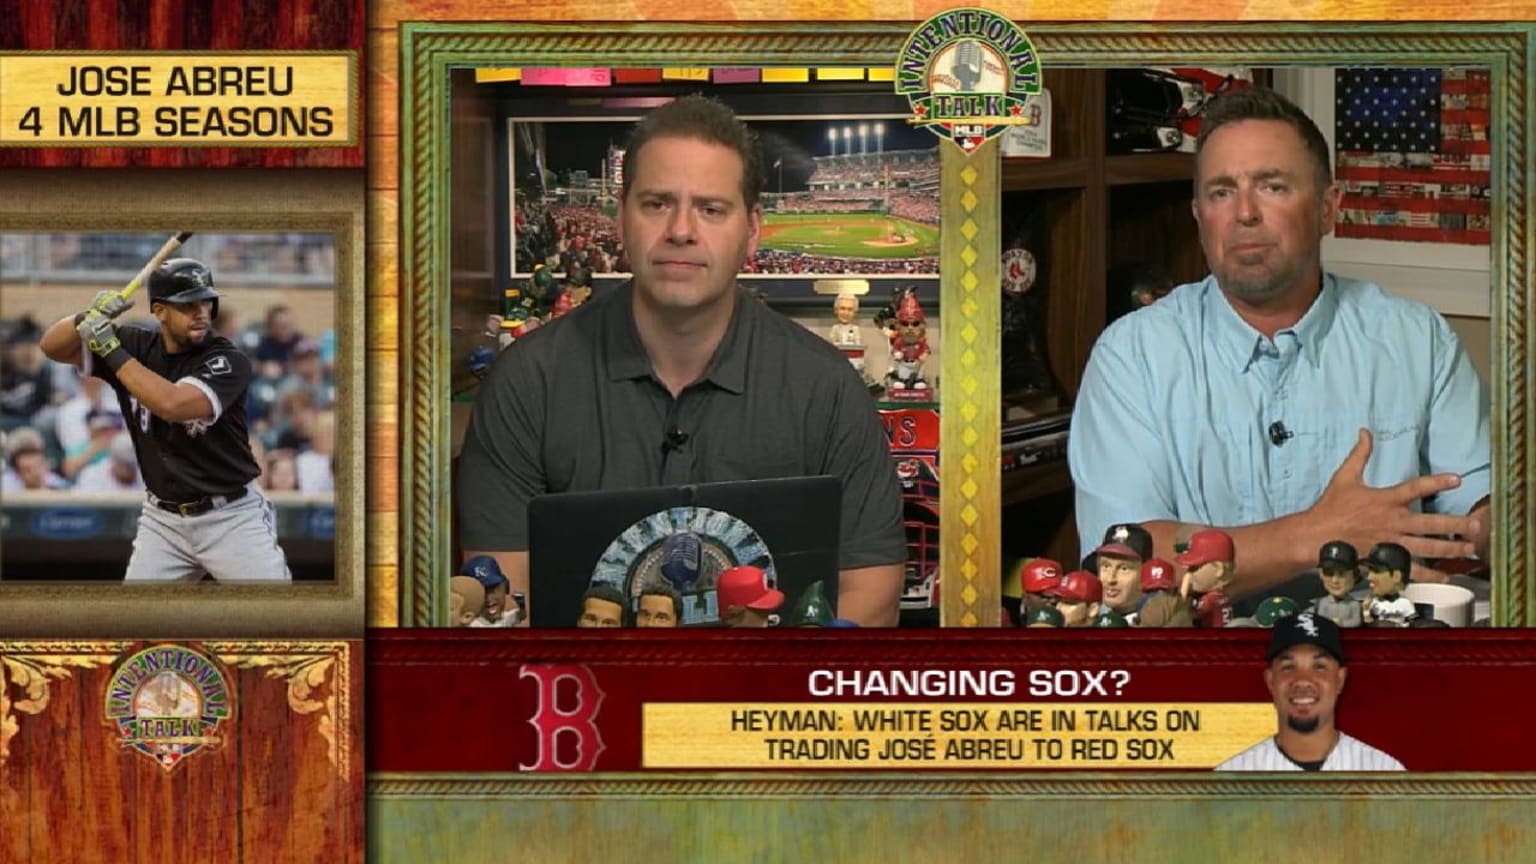 Red Sox, White Sox talking trade for Jose Abreu - The Boston Globe